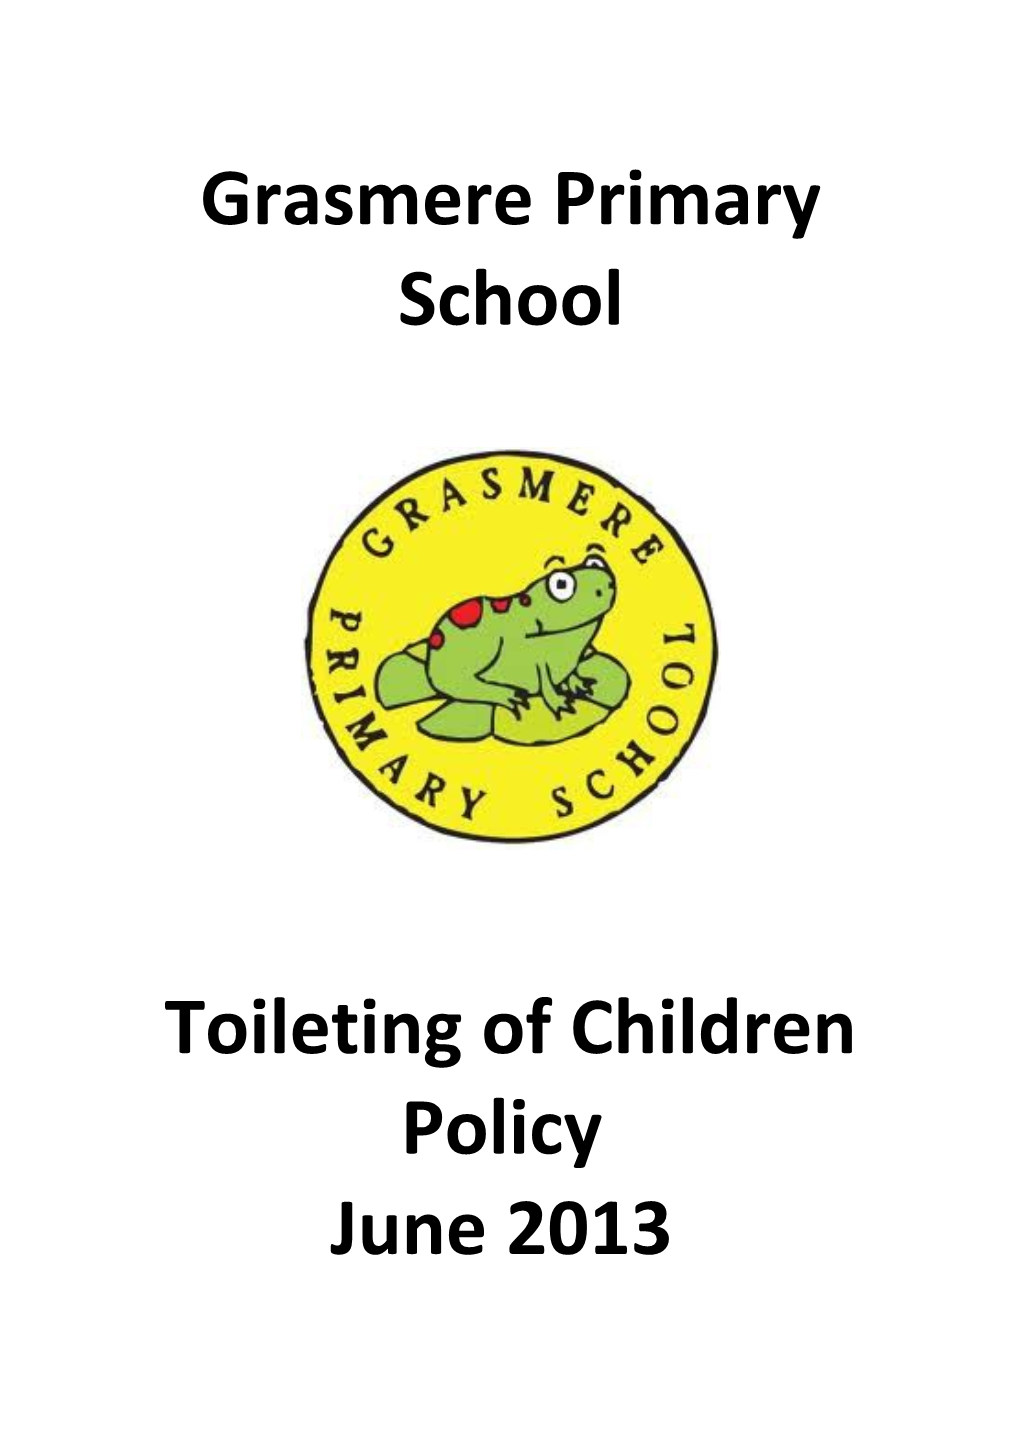 Grasmere Primary School Toileting of Children Policy